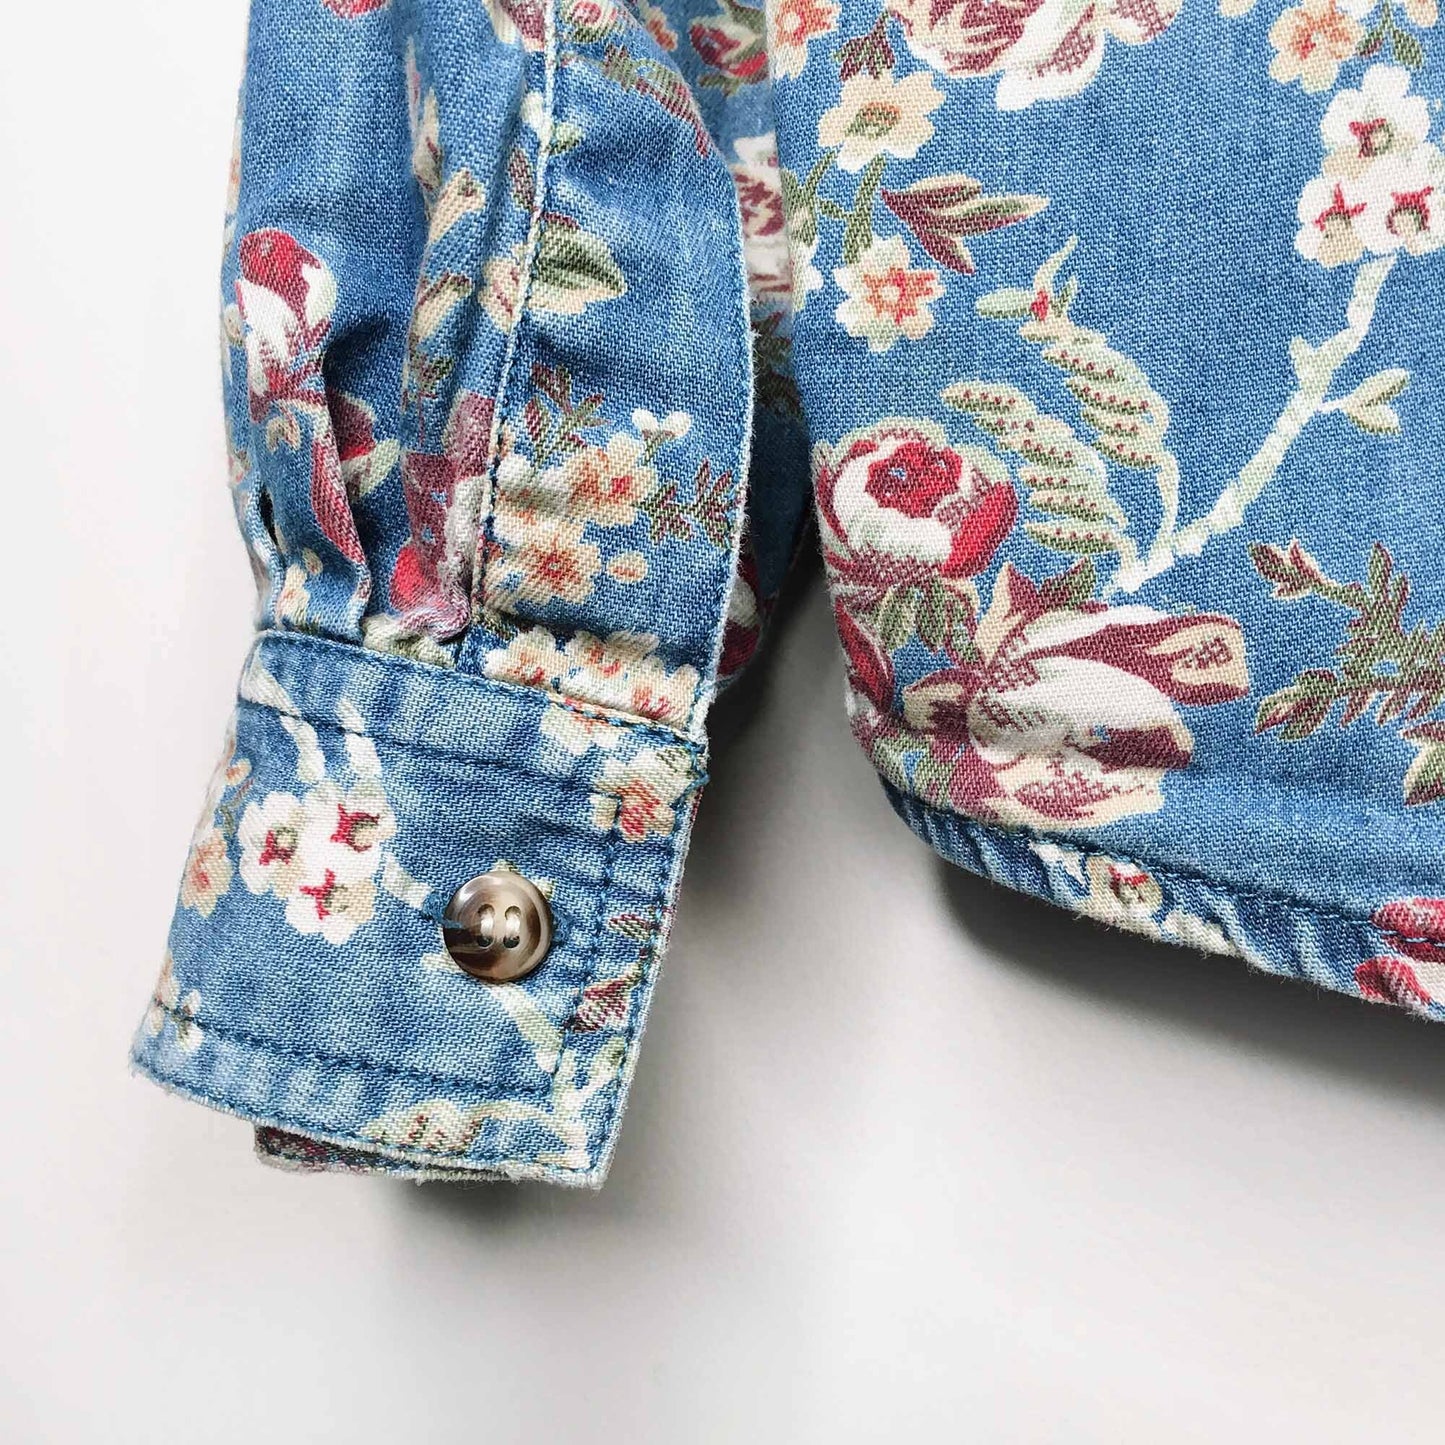 Vintage Liz Claiborne floral denim button down - size Medium